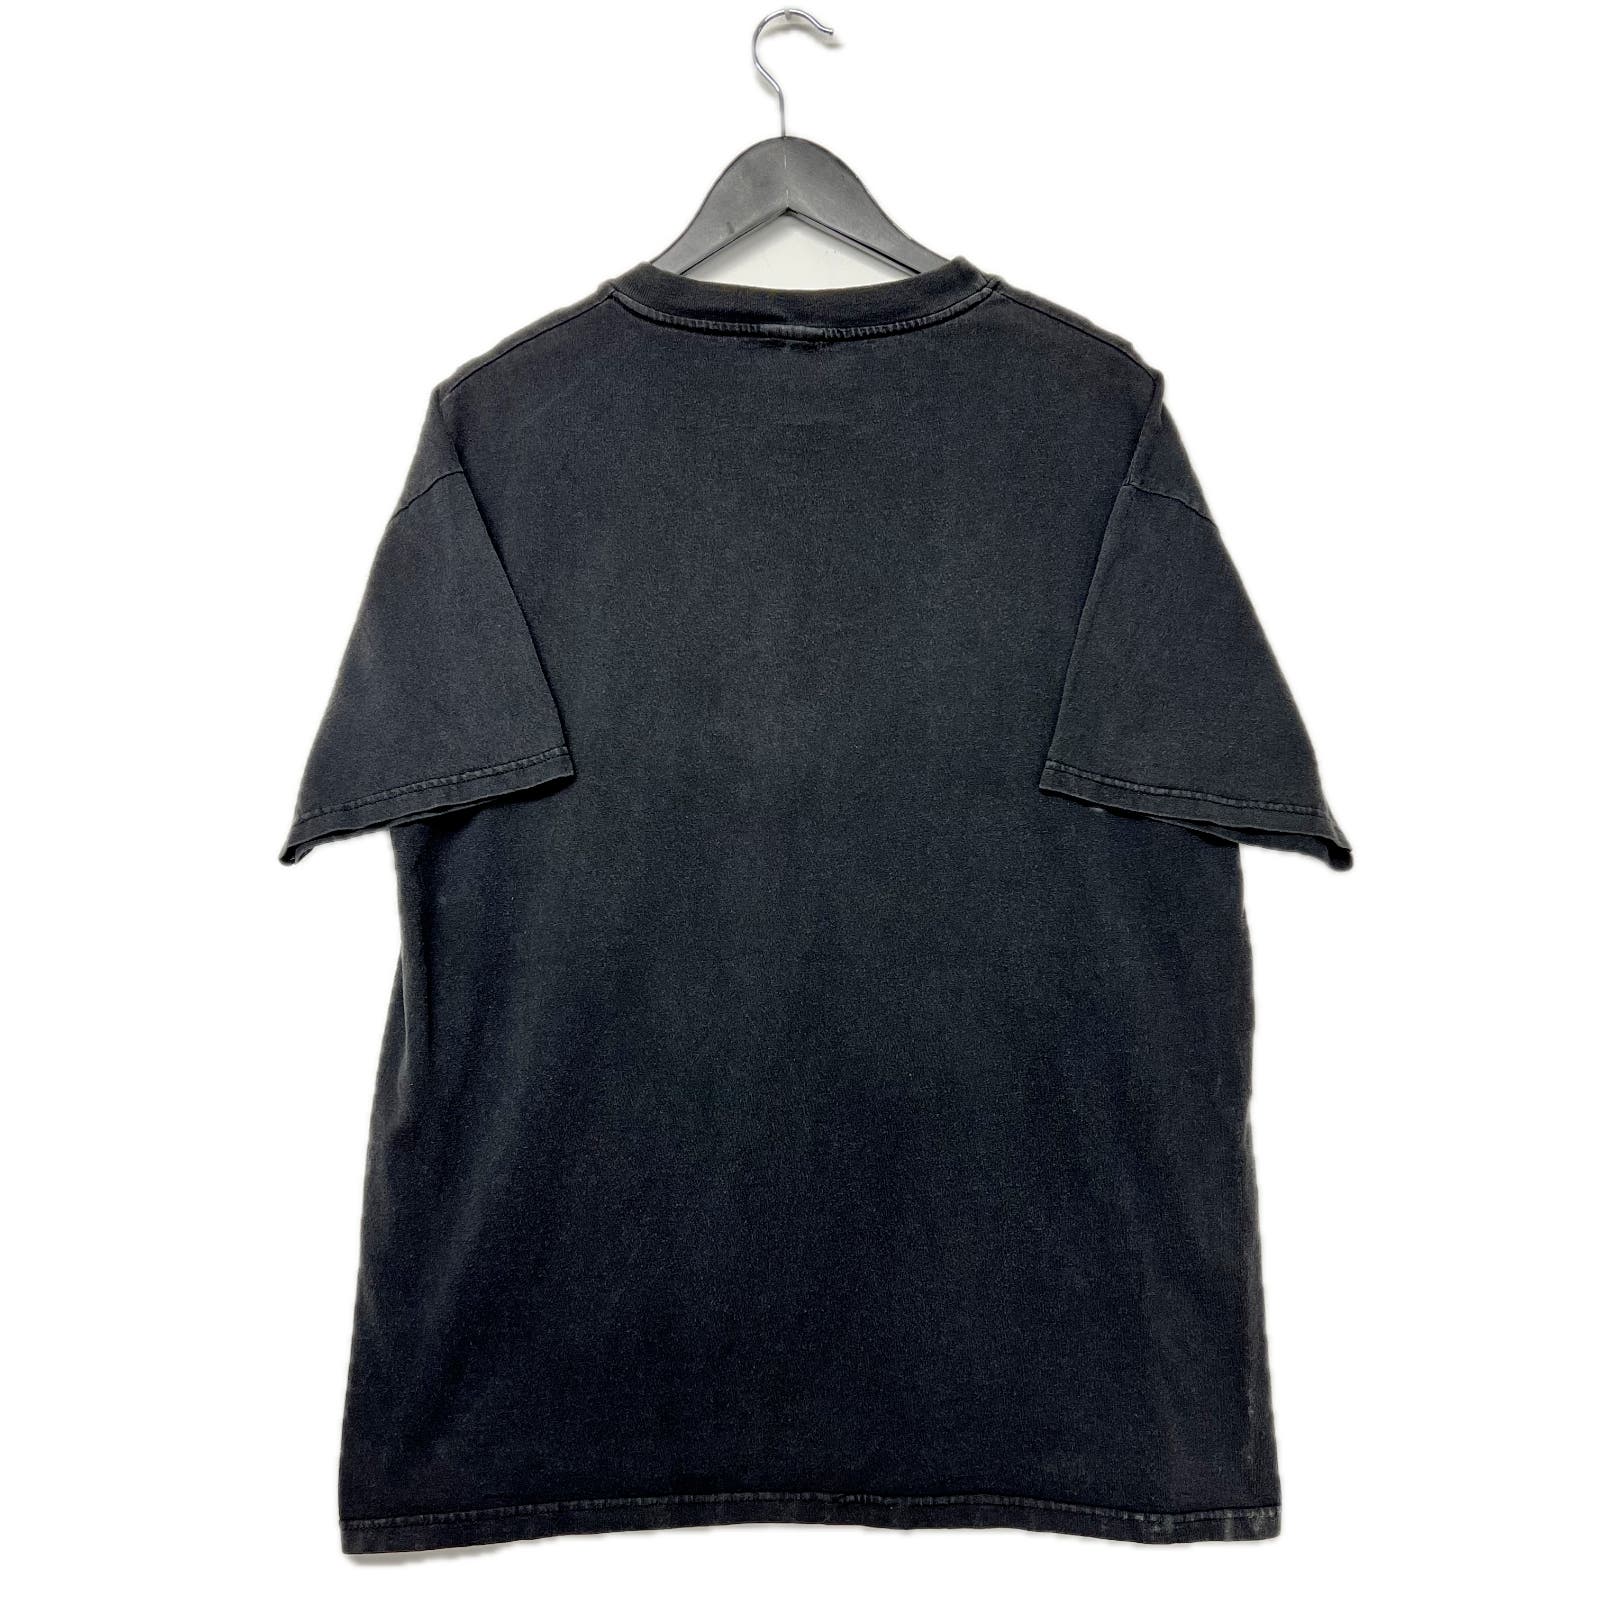 1990s Ramones T-shirt Size L